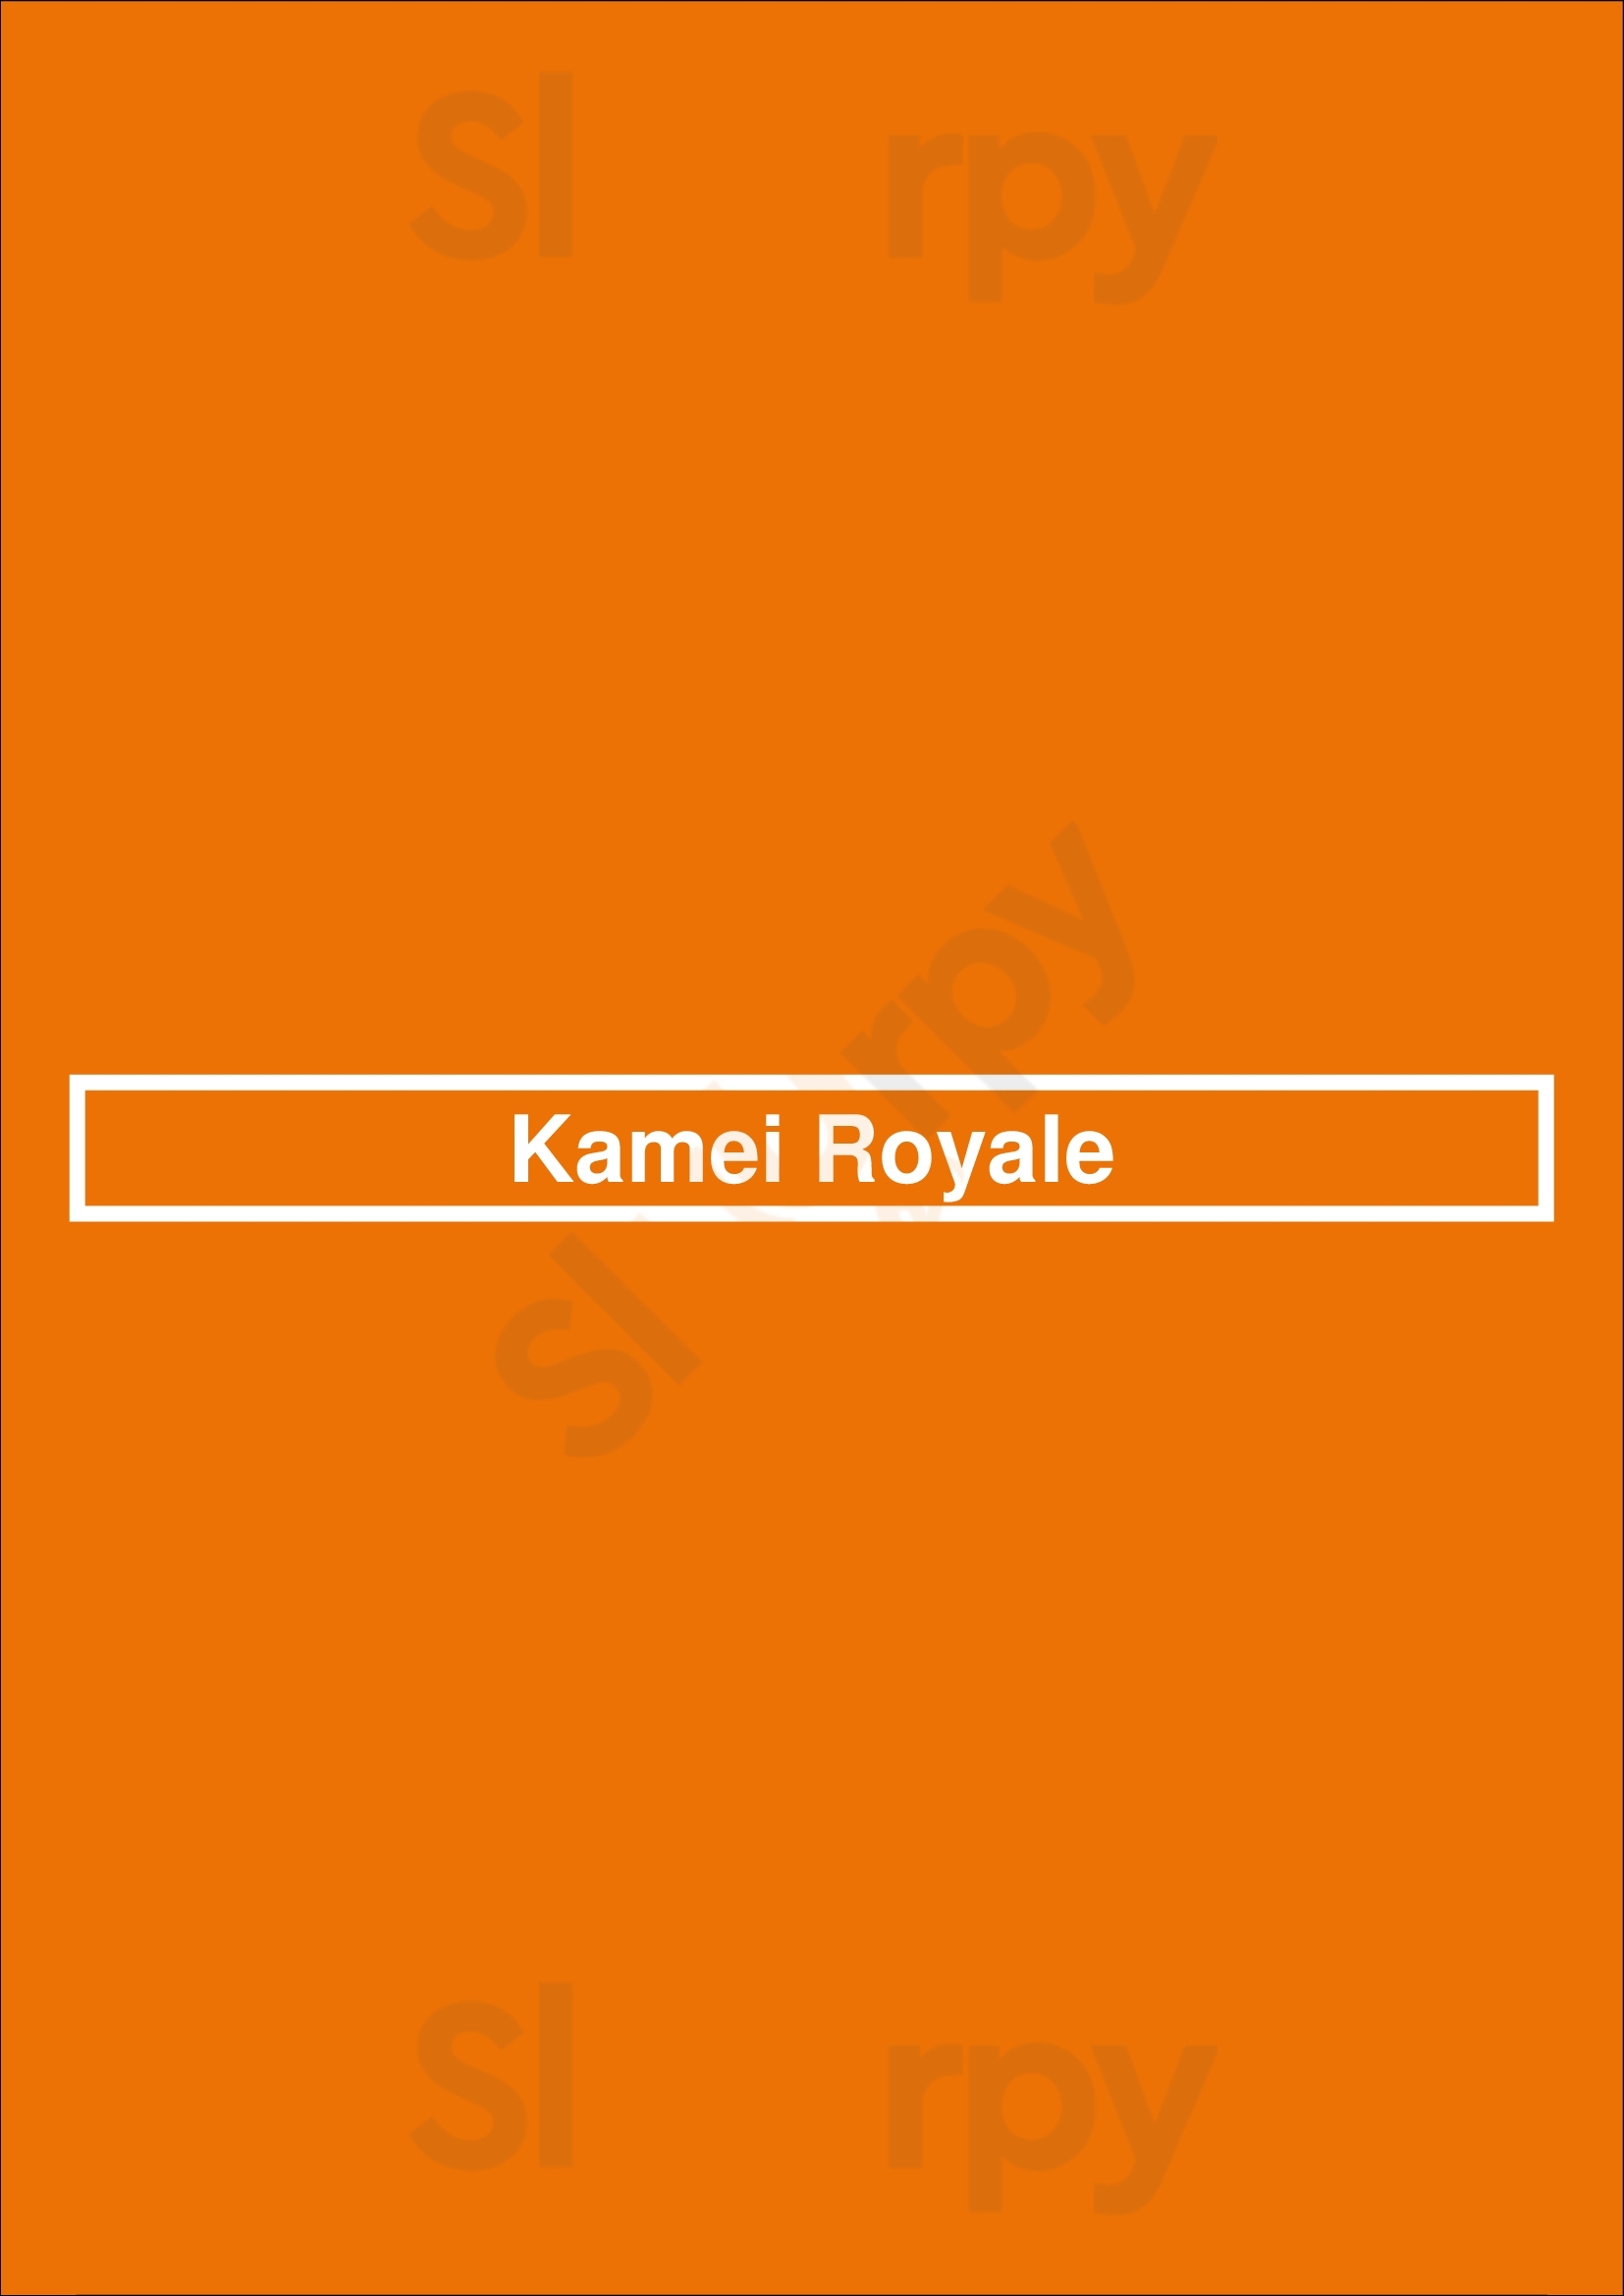 Kamei Royale Vancouver Menu - 1